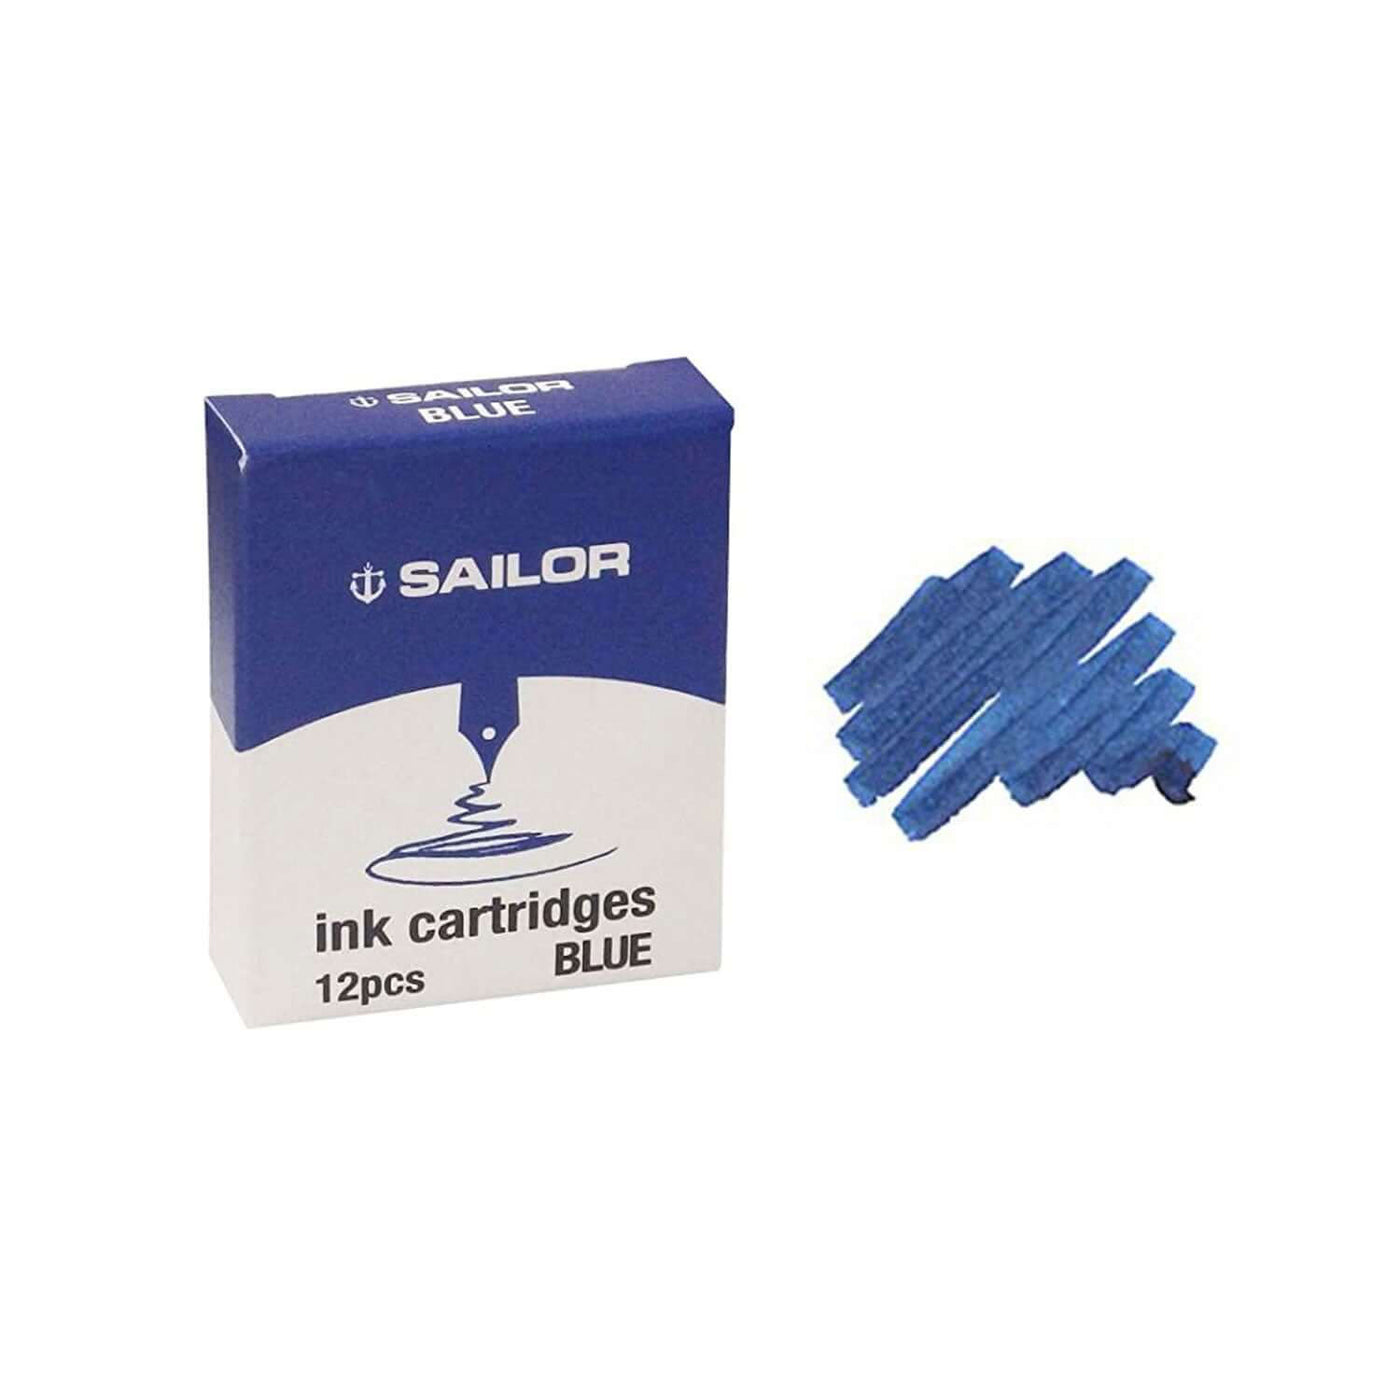 Sailor Dye Based Ink Cartridge Blue - Pack Of 12